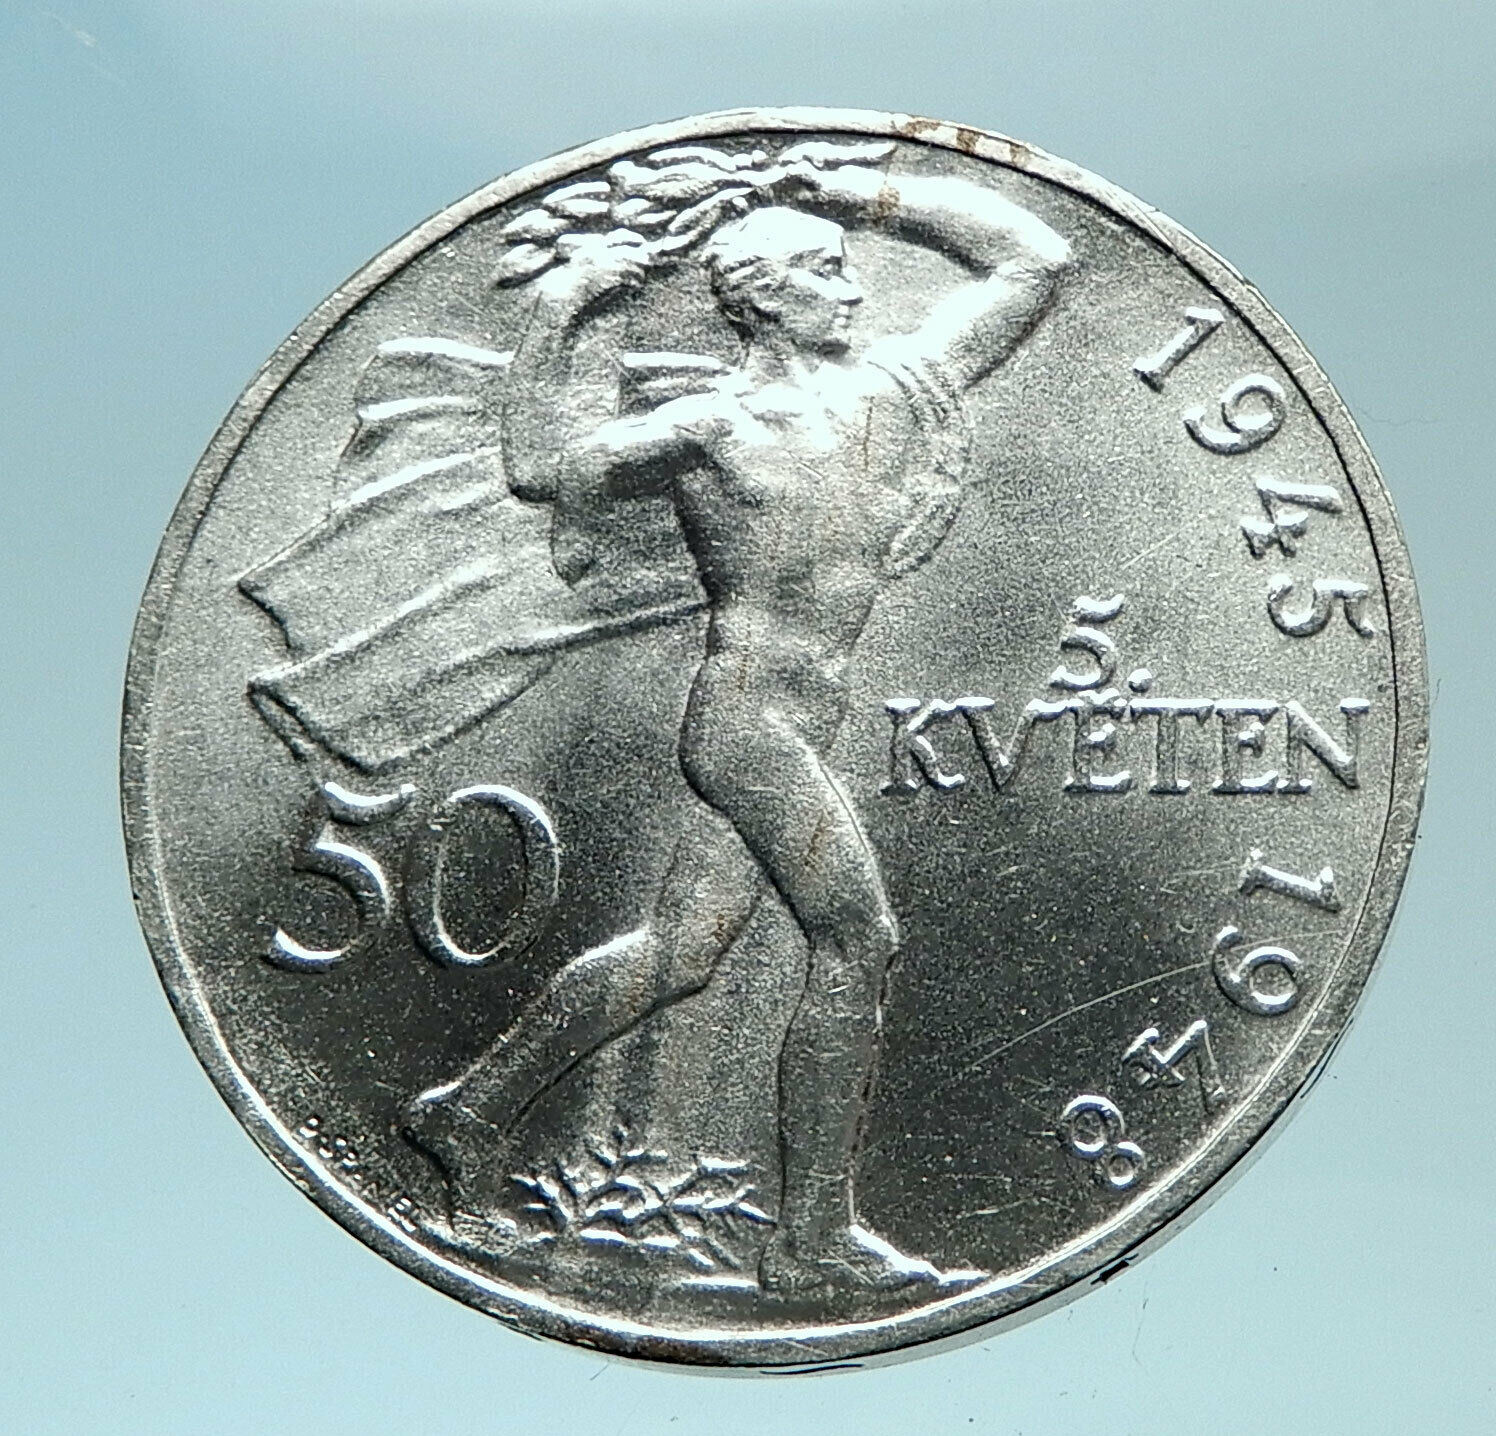 1948 CZECHOSLOVAKIA Slovak Uprising Antique Genuine Silver 100 Korun Coin i78770